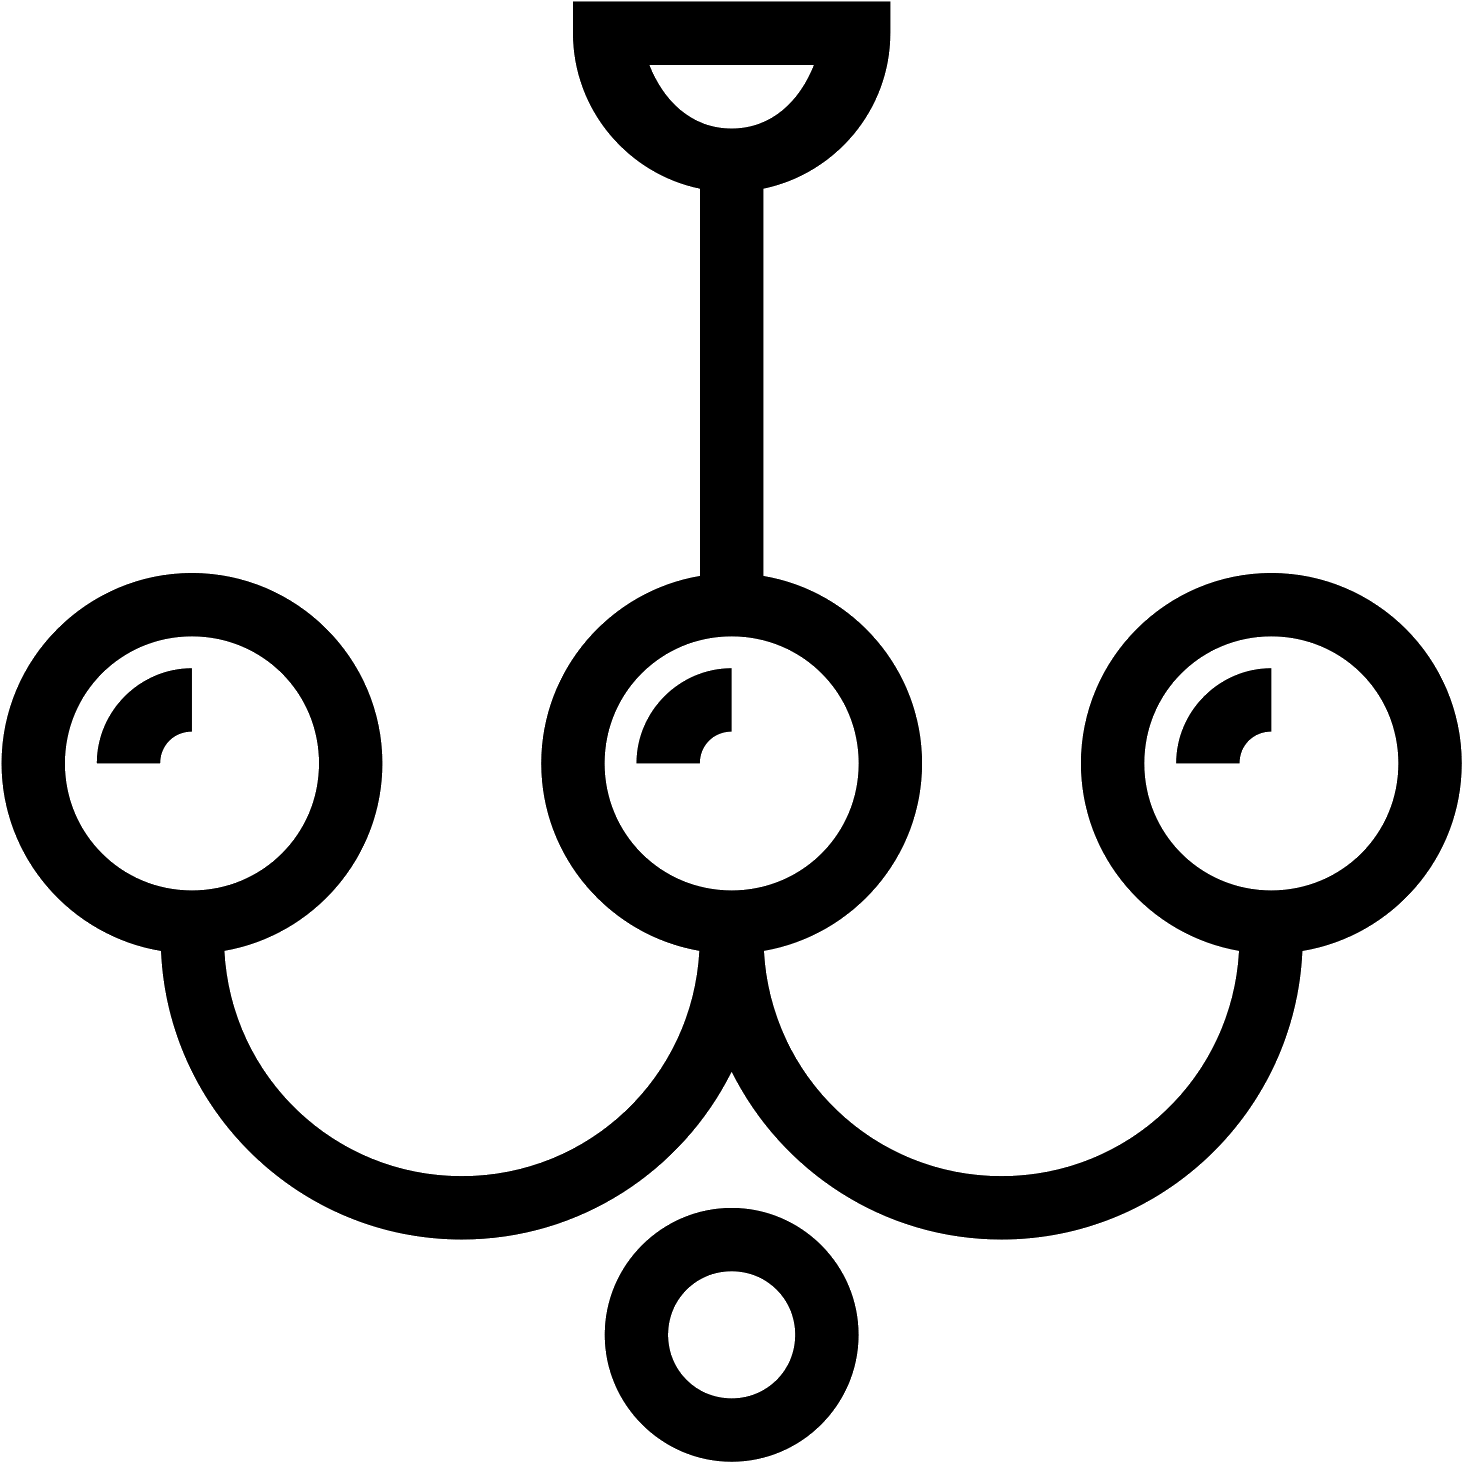 1600 X 1600 4 - Chandelier Icon (1600x1600)